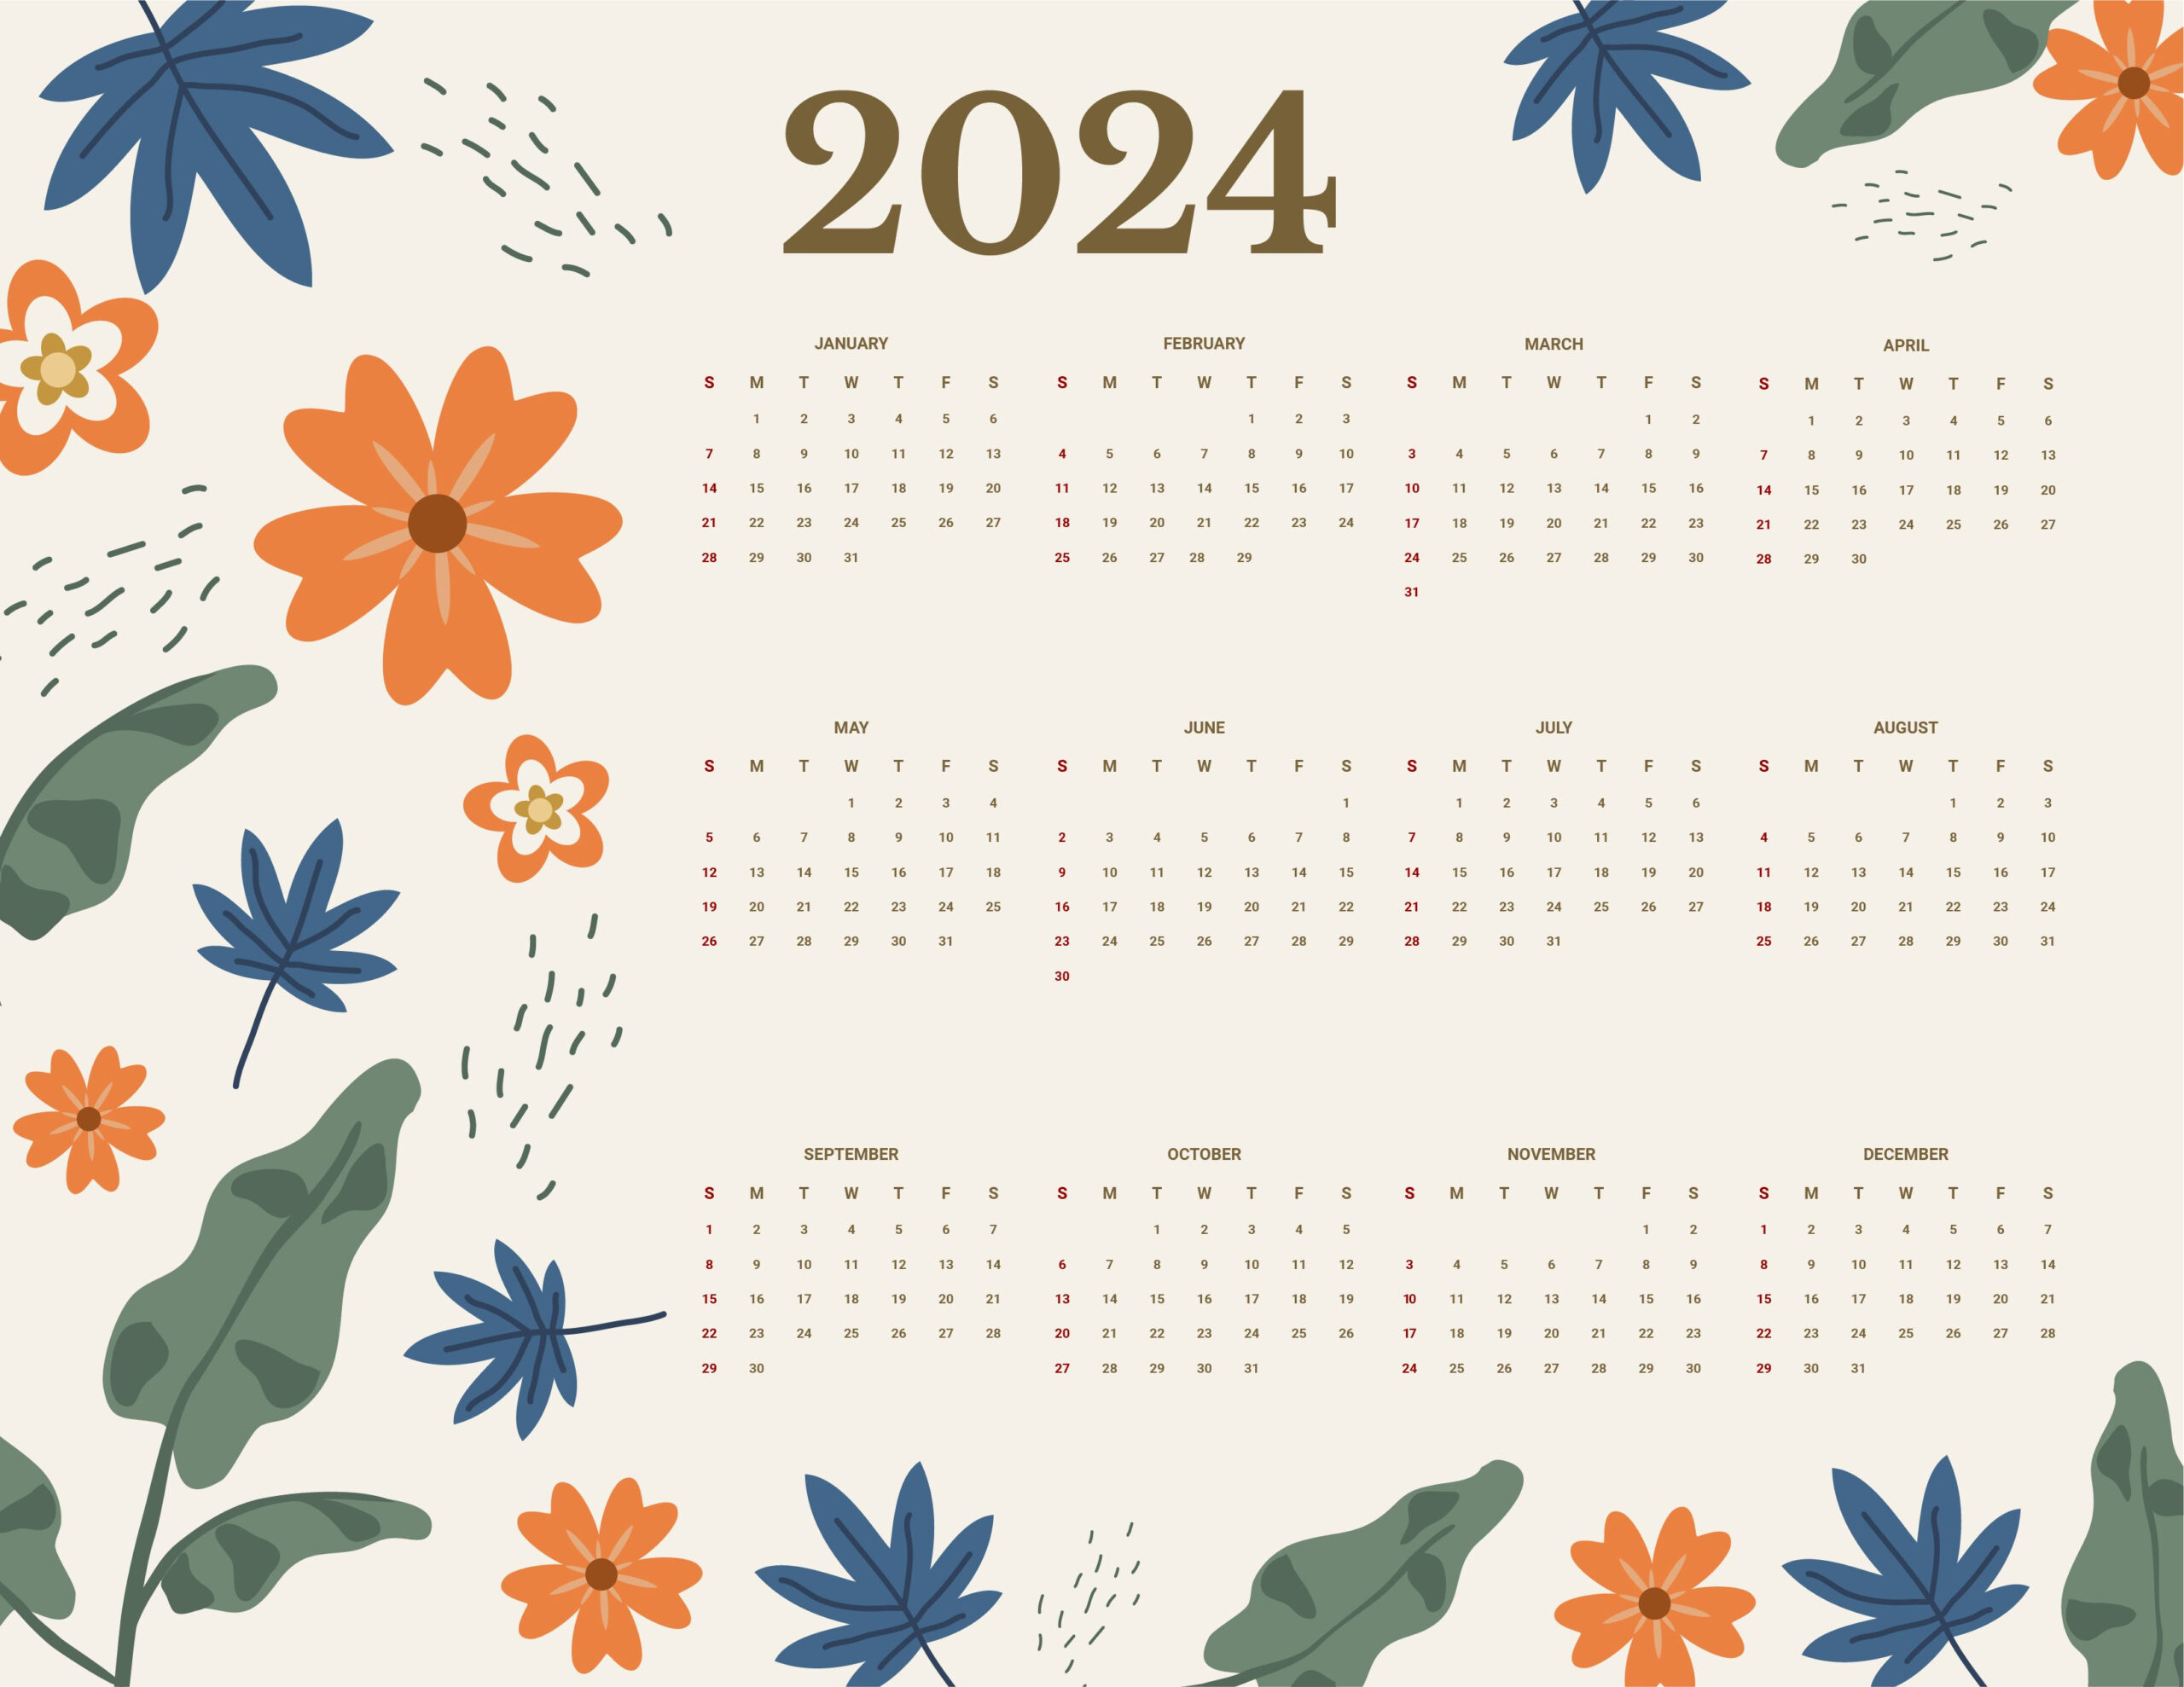 Floral Year 2024 Calendar - Download In Word, Google Docs | Printable Calendar 2024 Floral